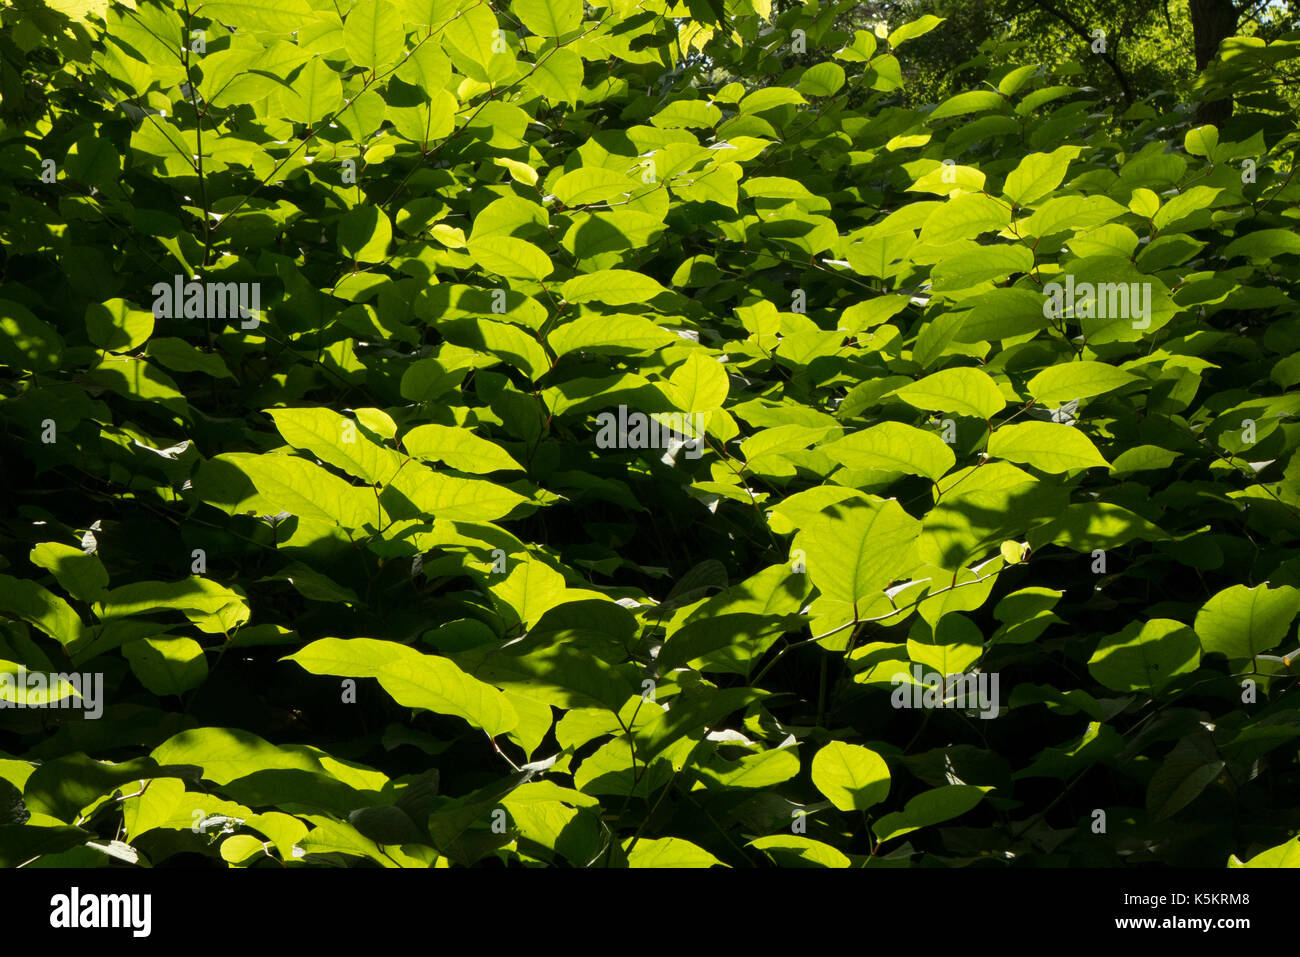 Sun dappled foliage, green leafs. Stock Photo